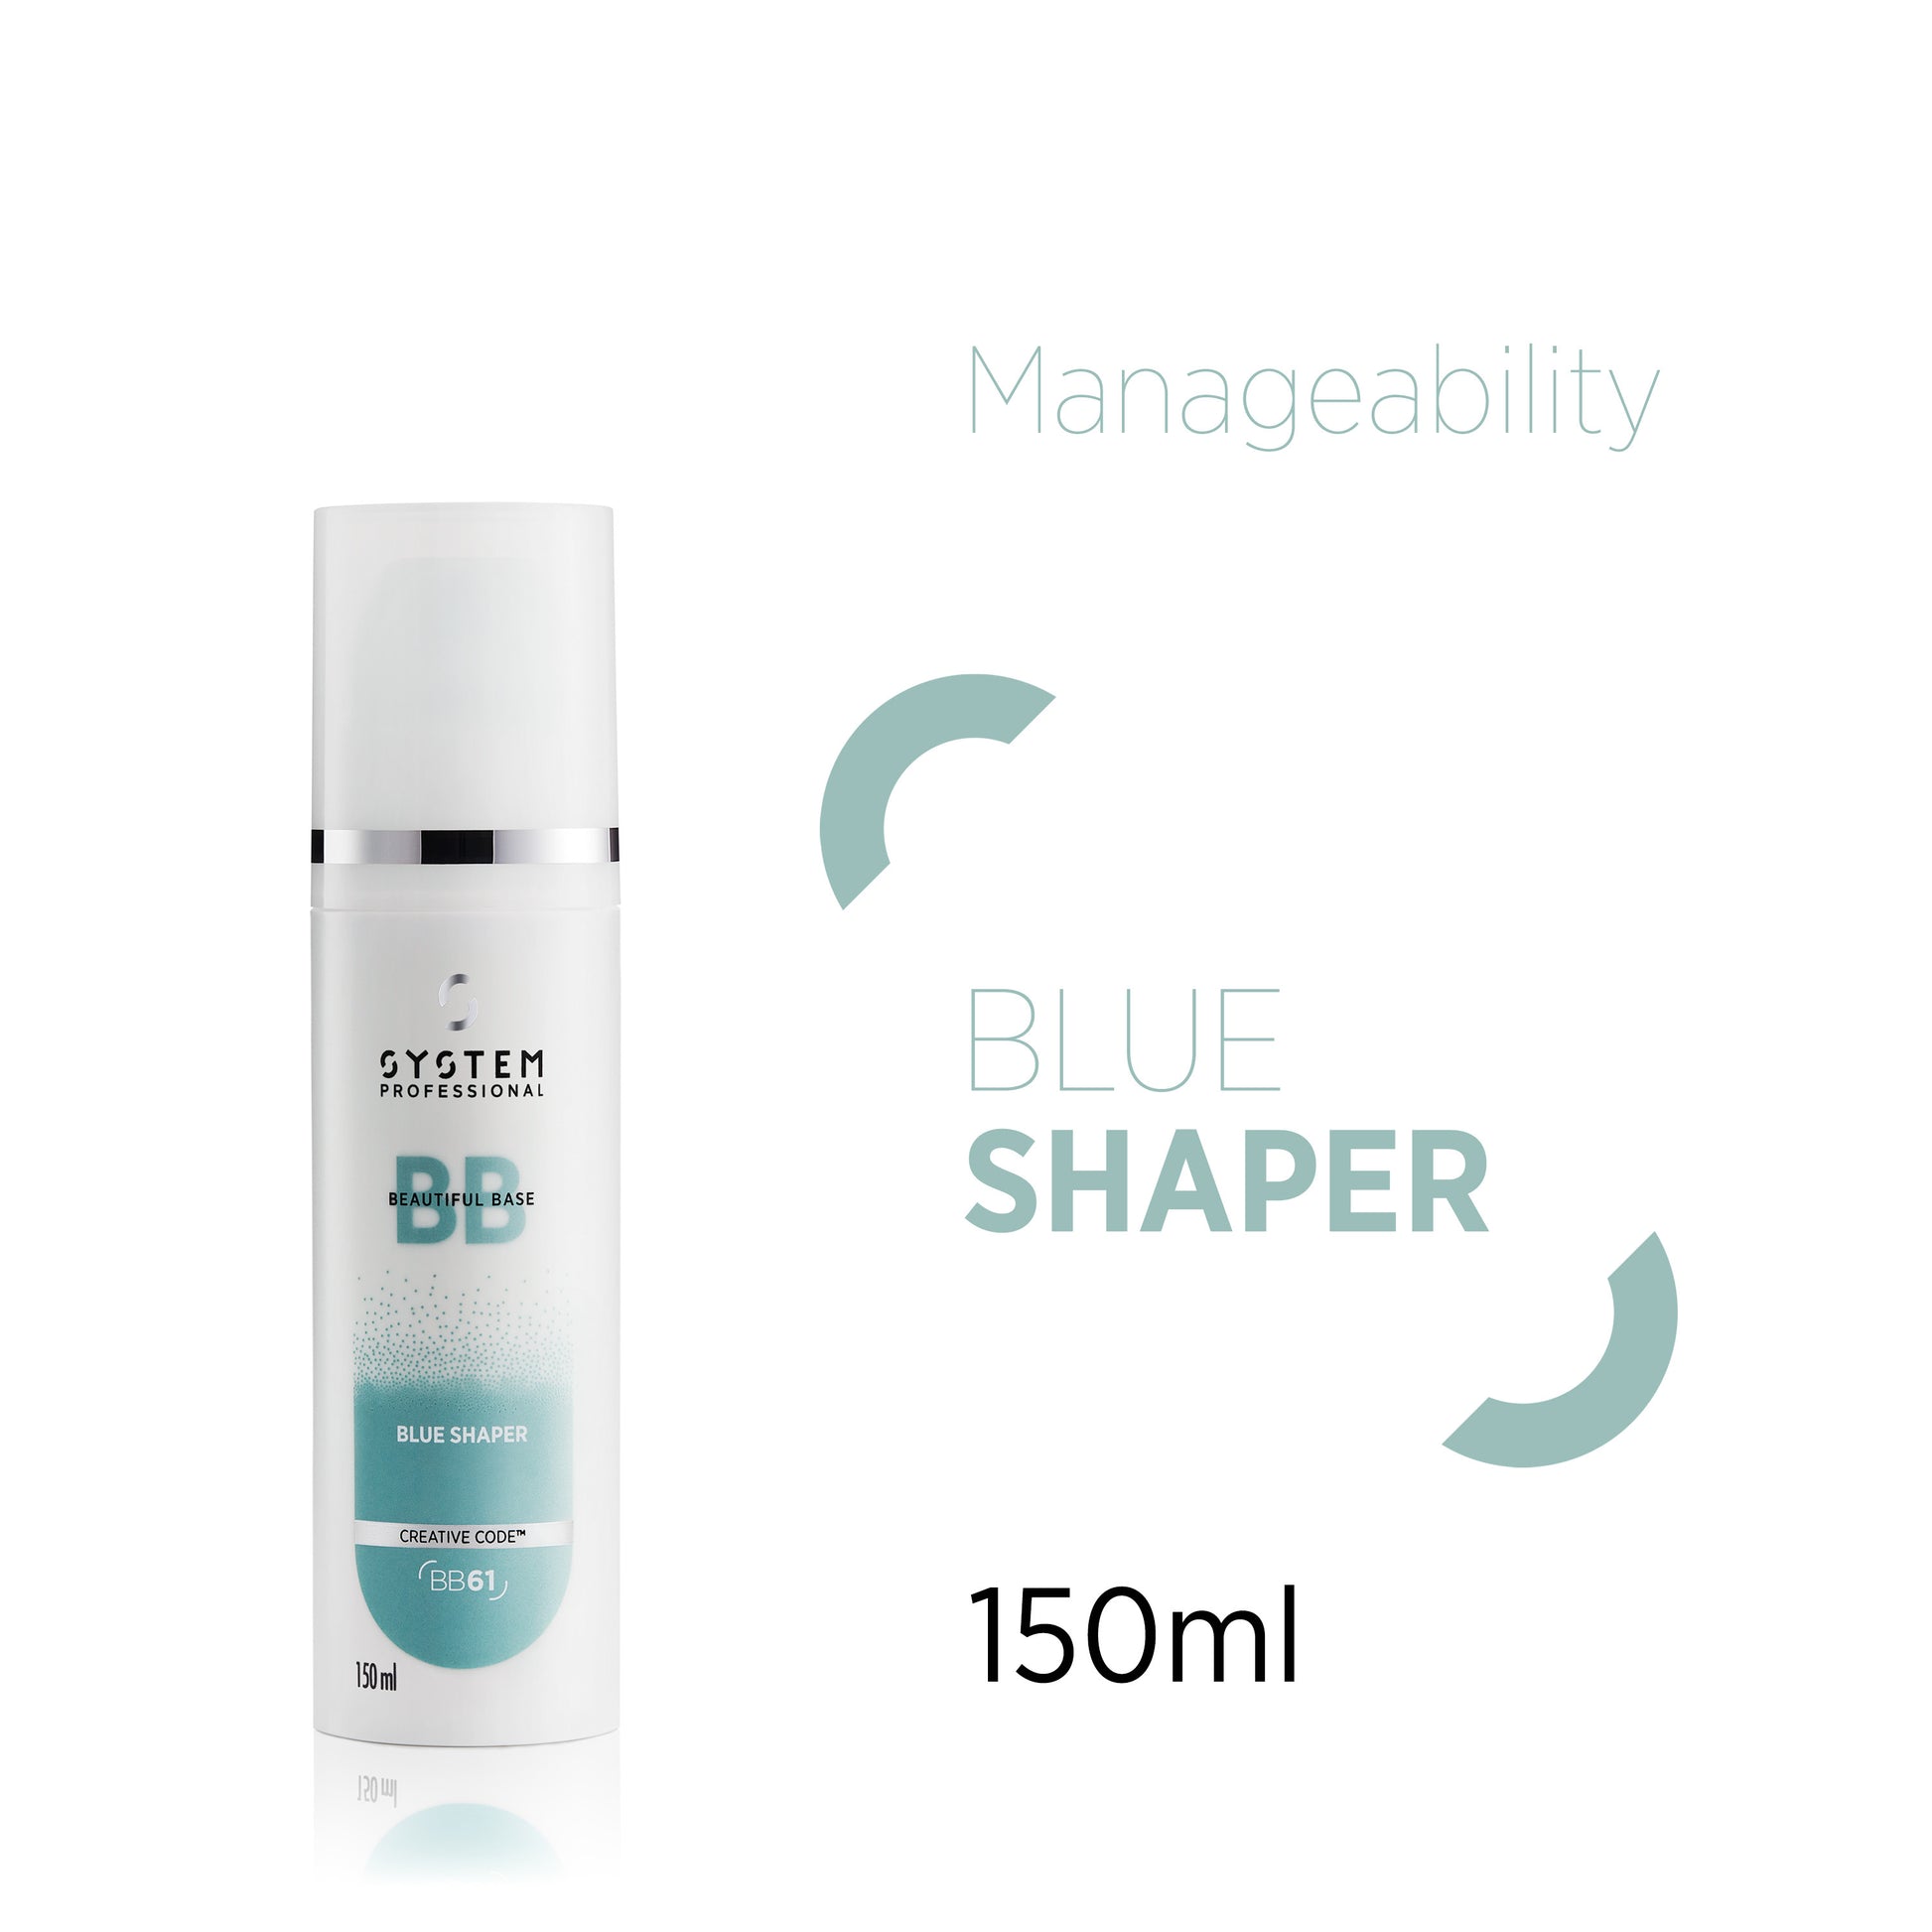 System Professional Beautiful Base Blue Shaper 150ml
